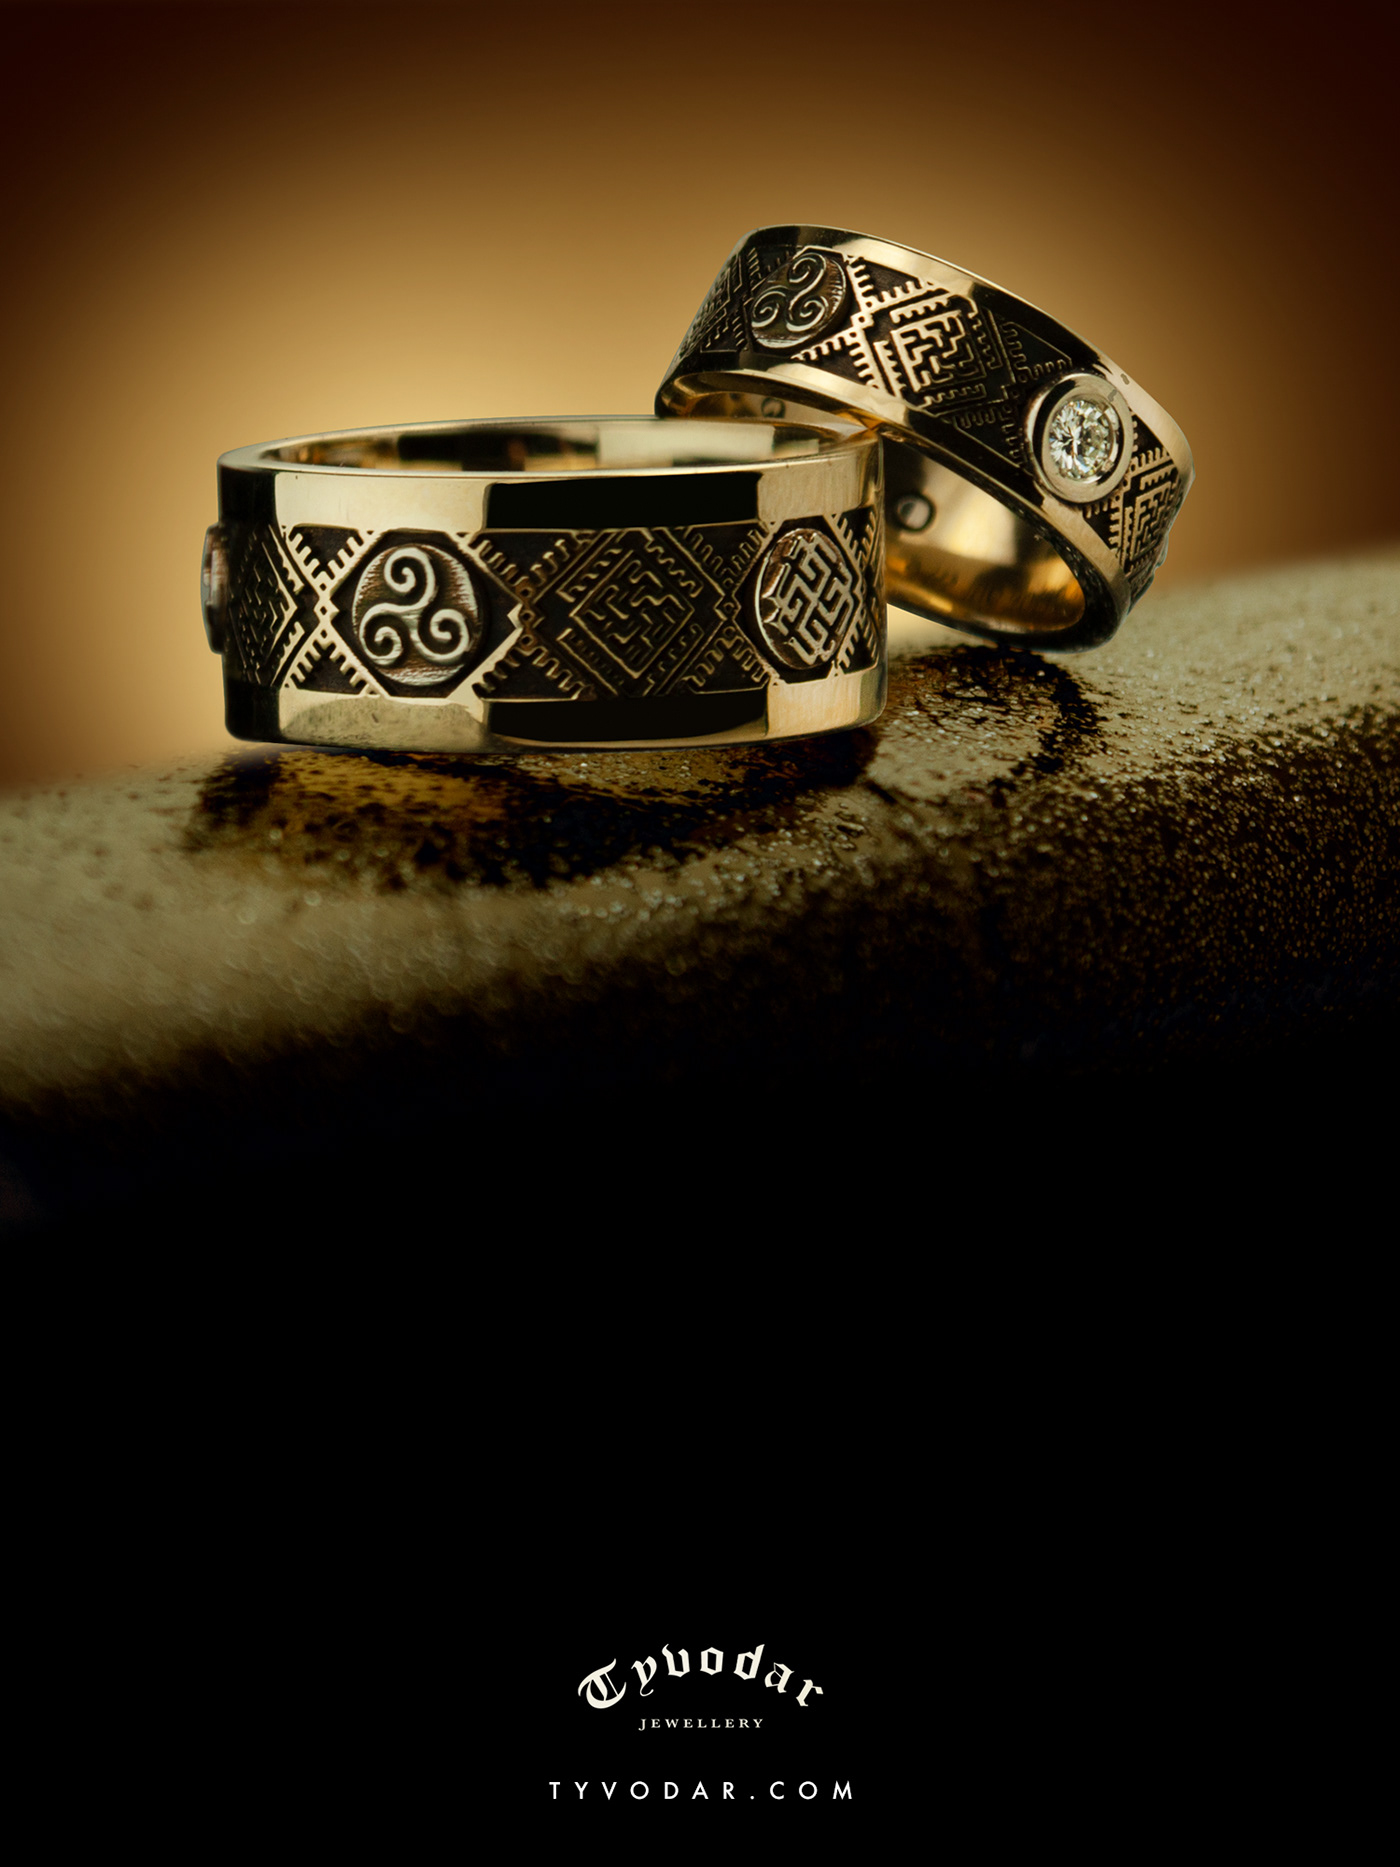 Slavic wedding rings Slavic Jewellery wedding slavic vedding tyvodar tyvodar.com